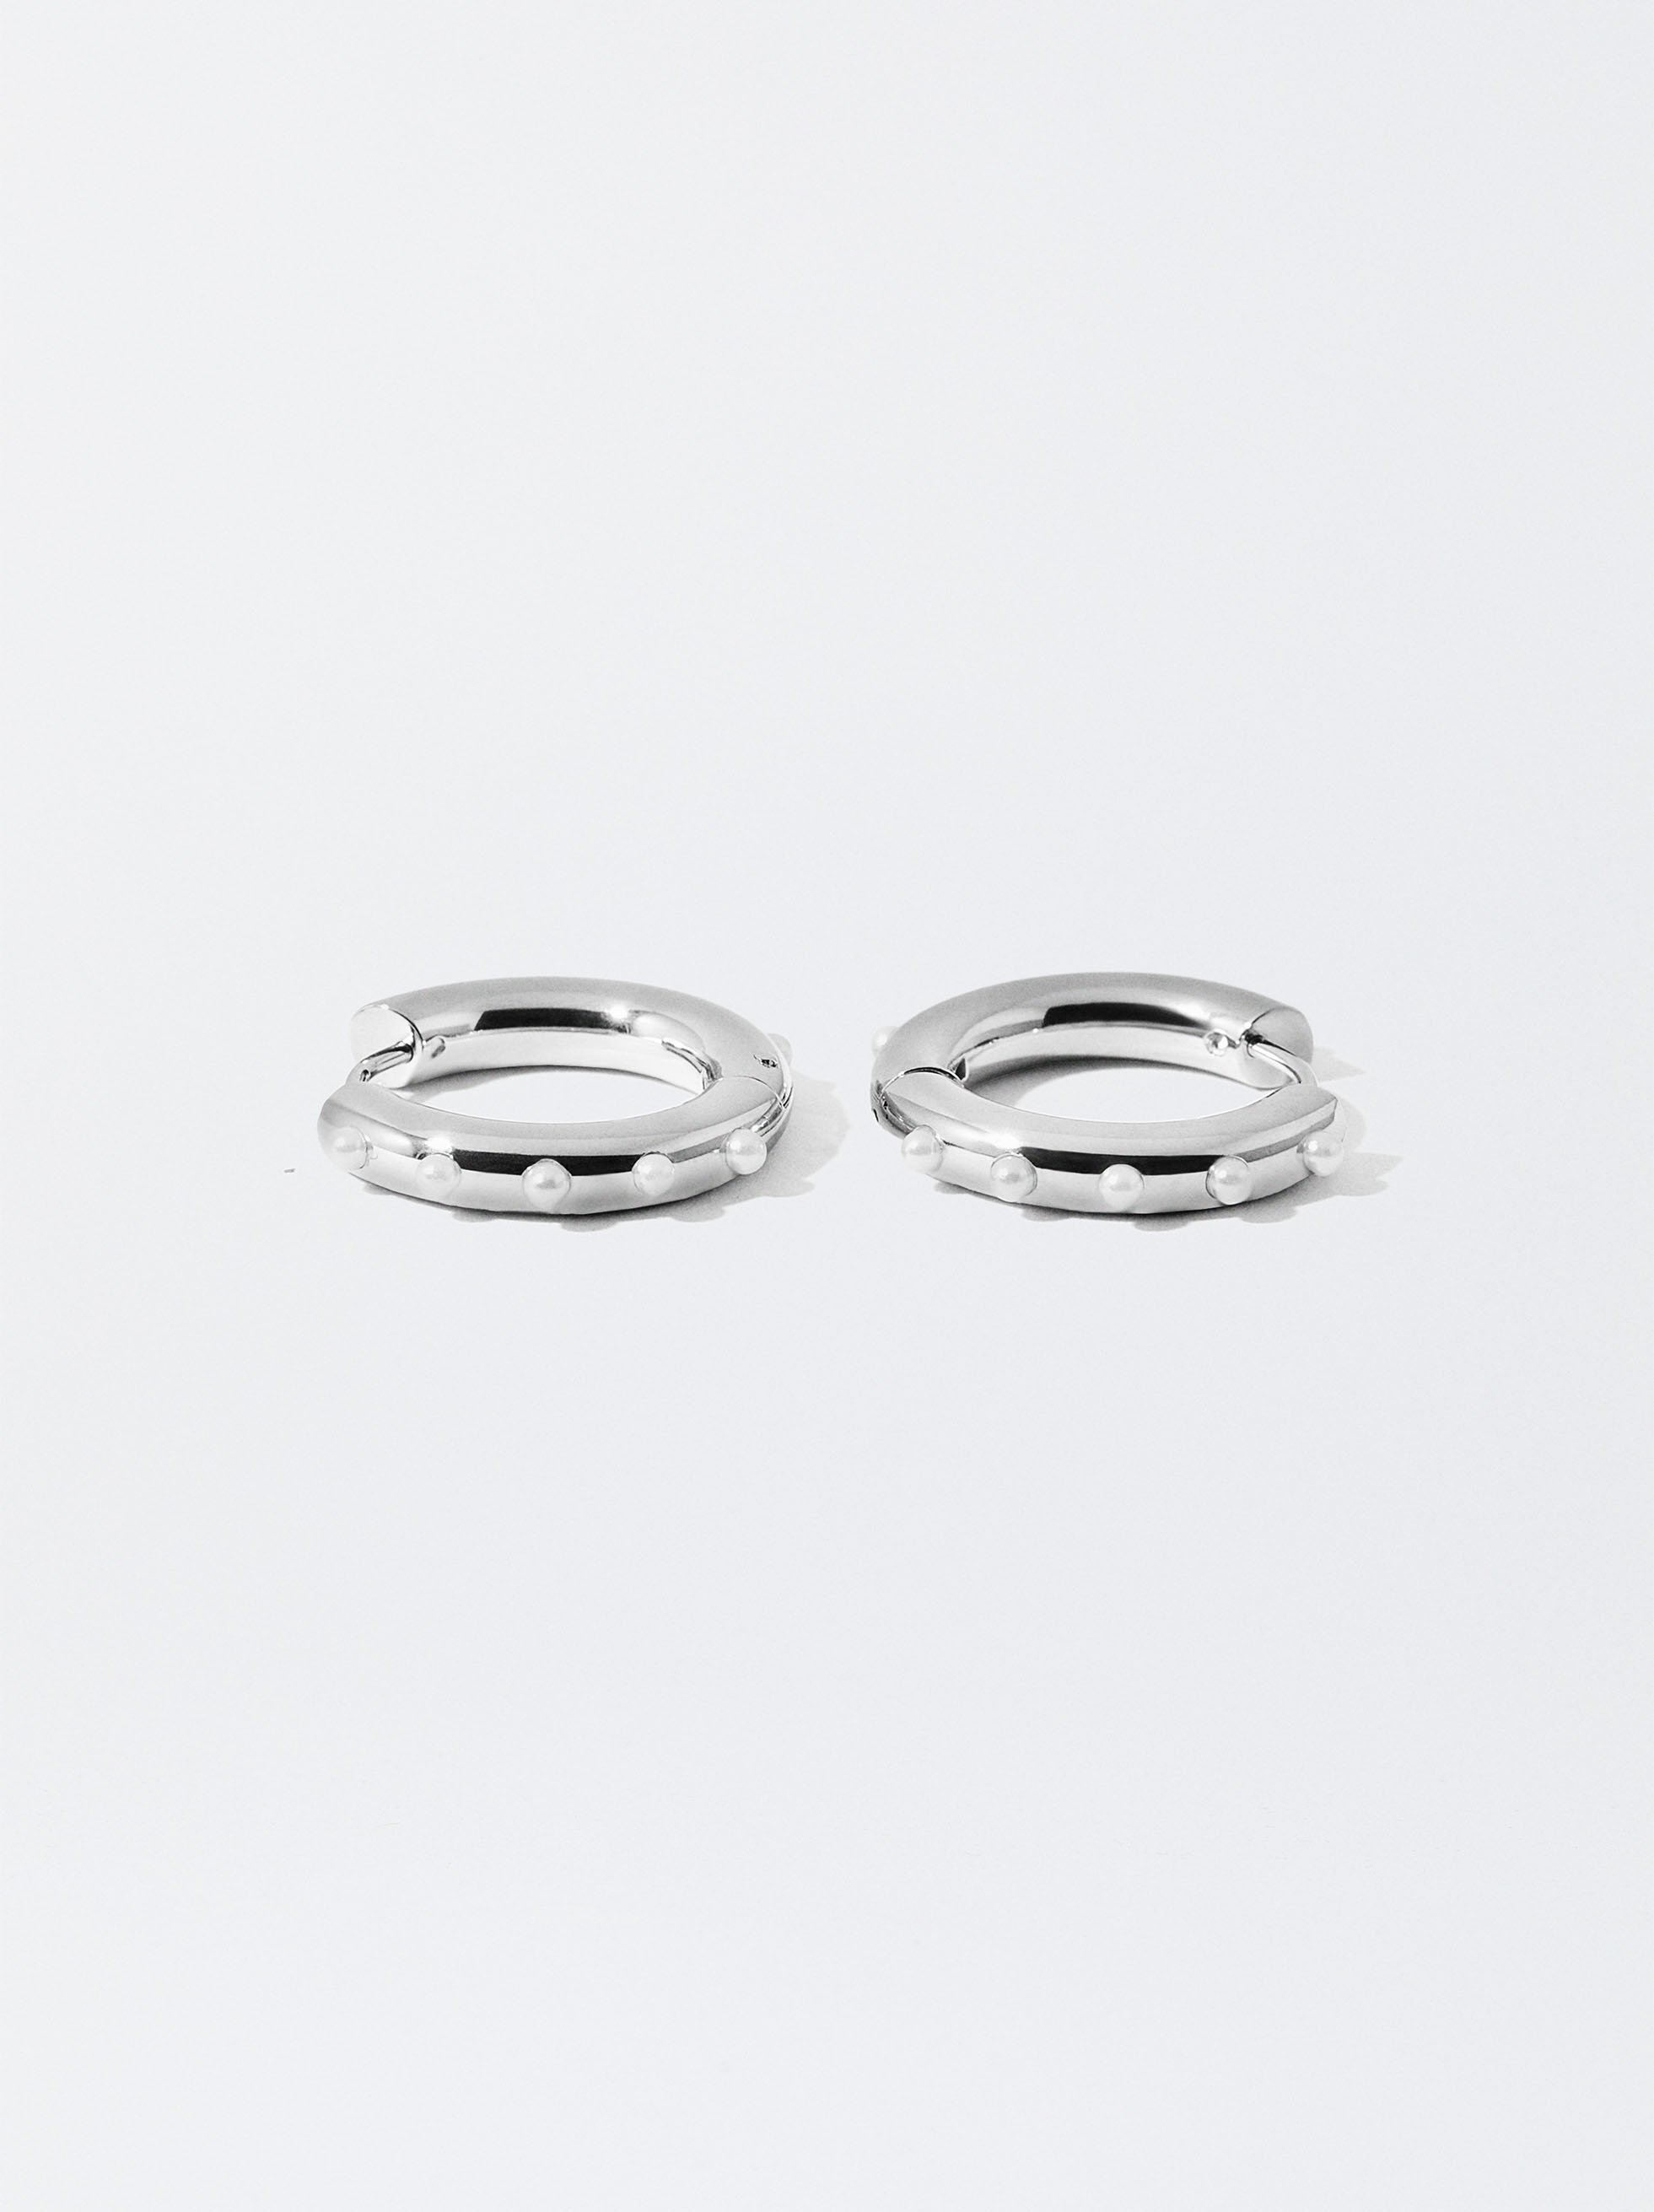 Stainless Steel Hoops Earrings With Pearls image number 2.0